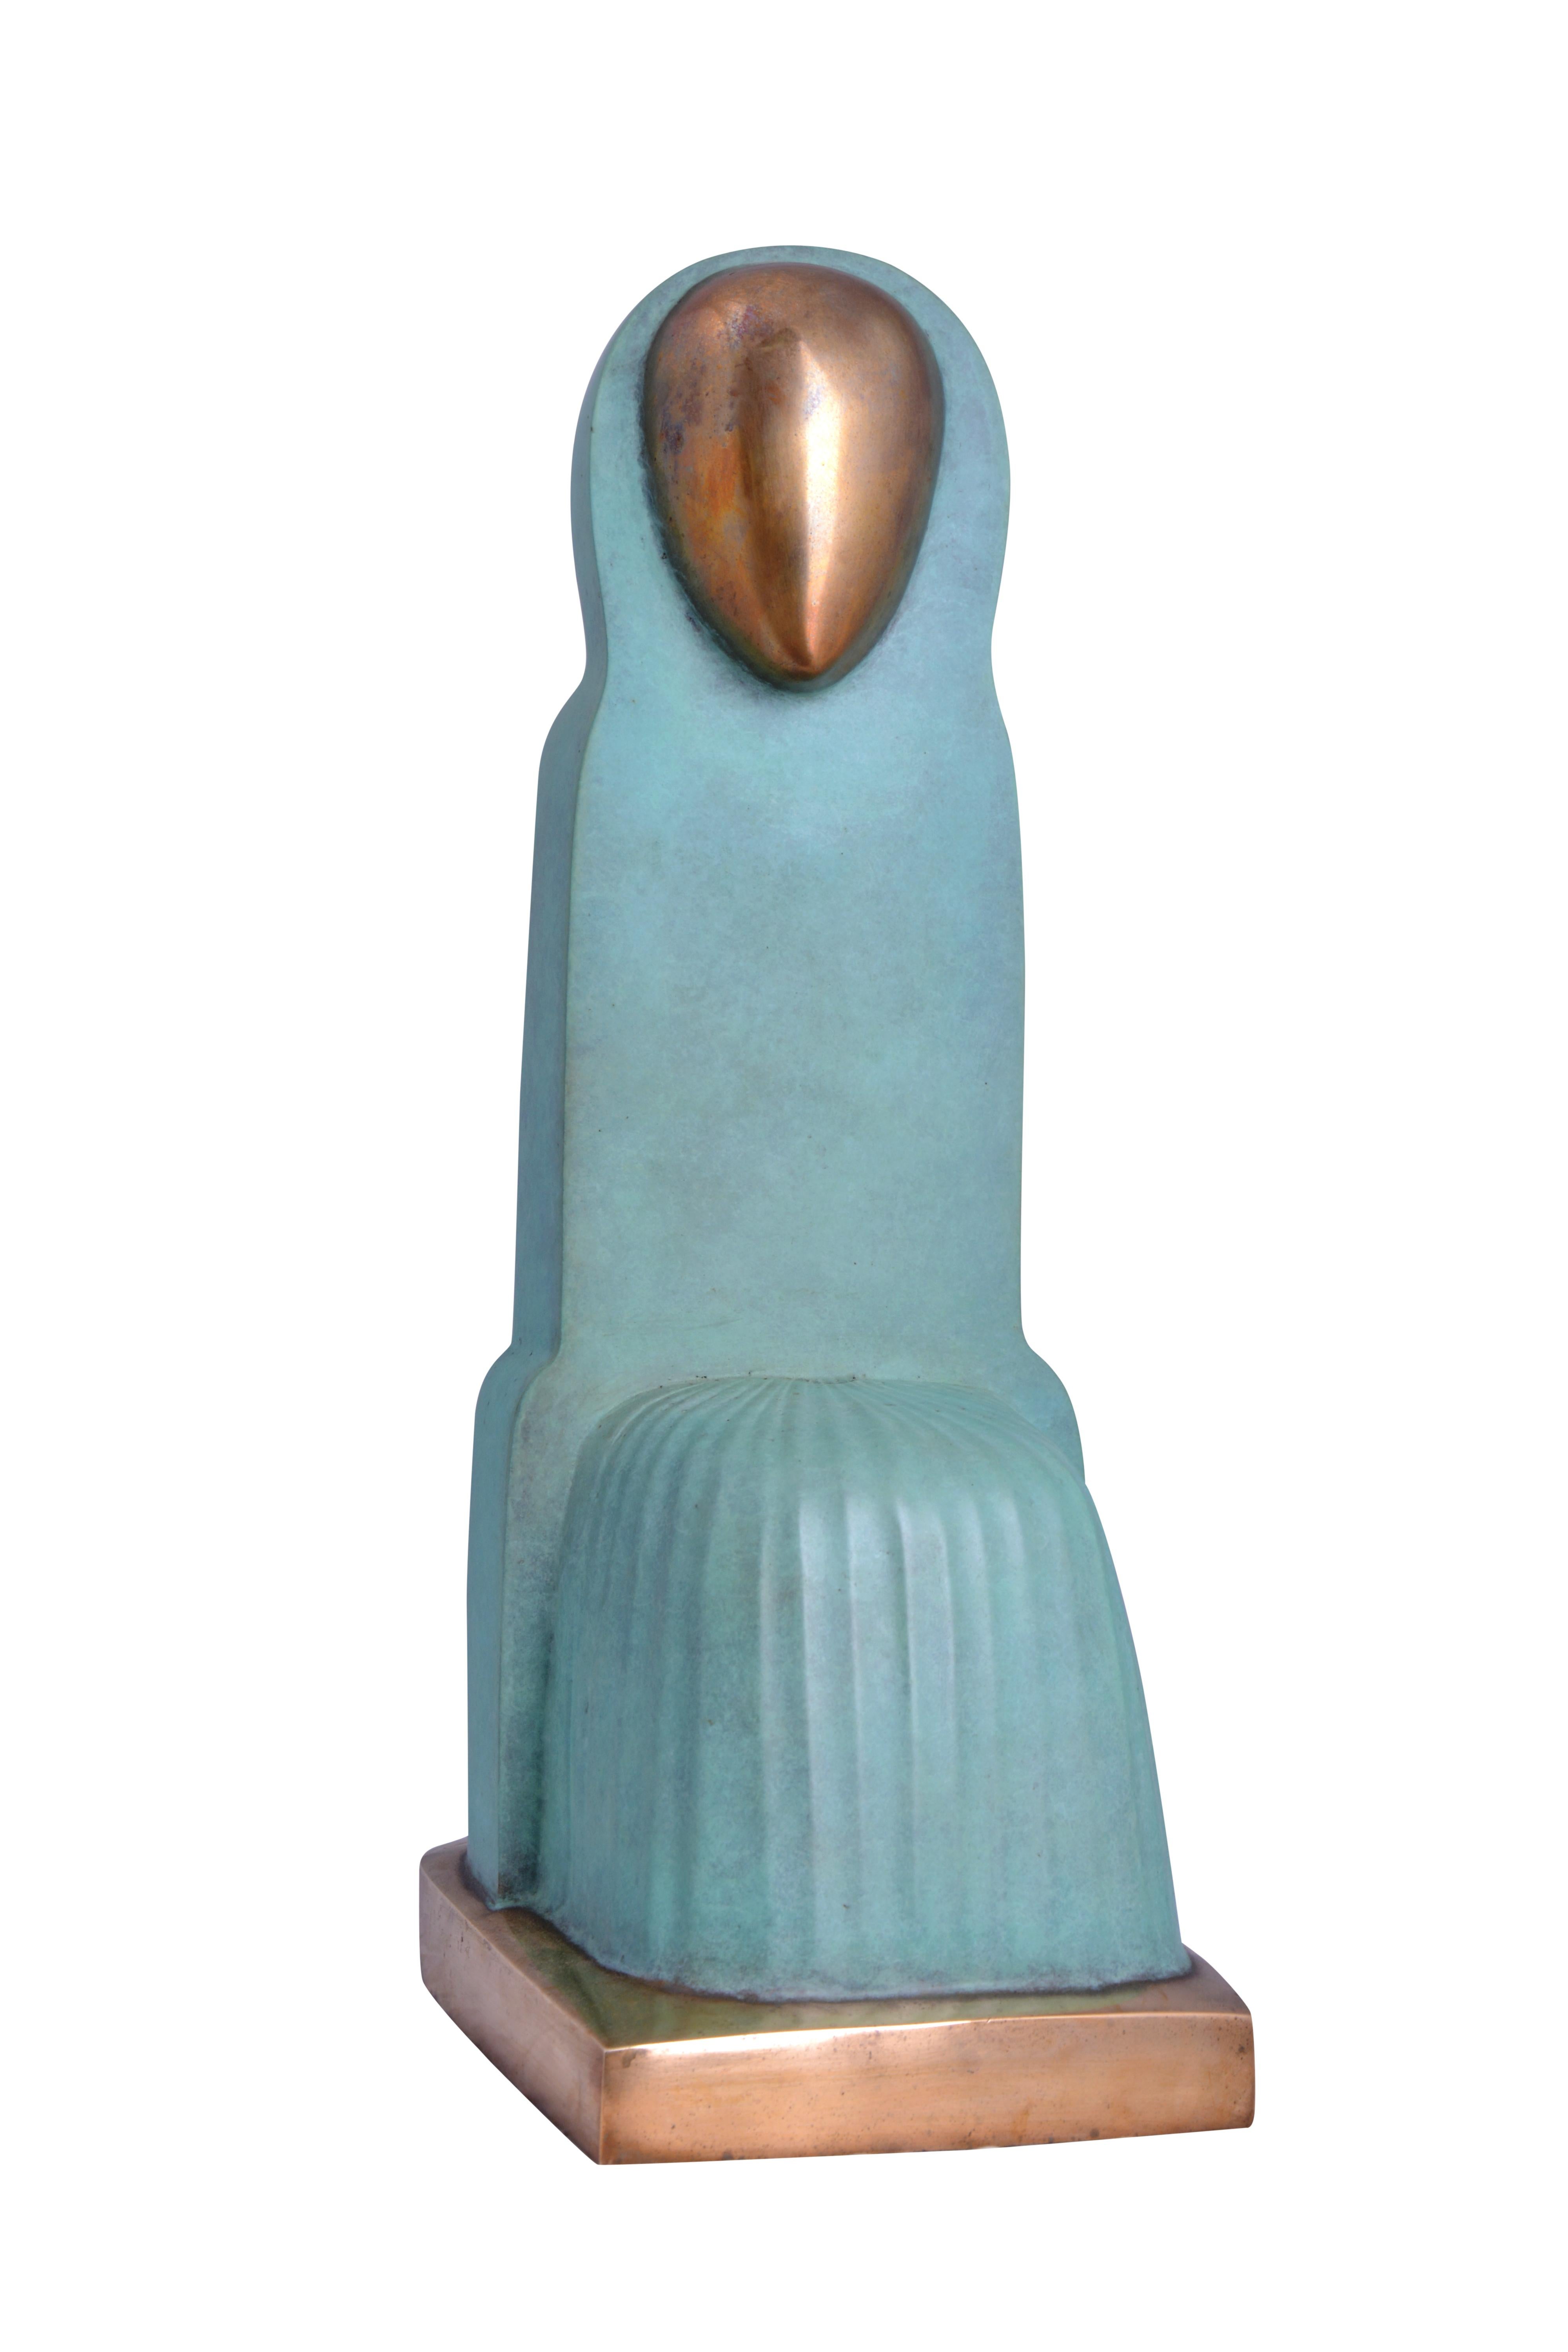 Maged Mekhail Figurative Sculpture - "El Sayed" Bronze Sculpture 18" x 7" x 8" inch by Maged Mikhail